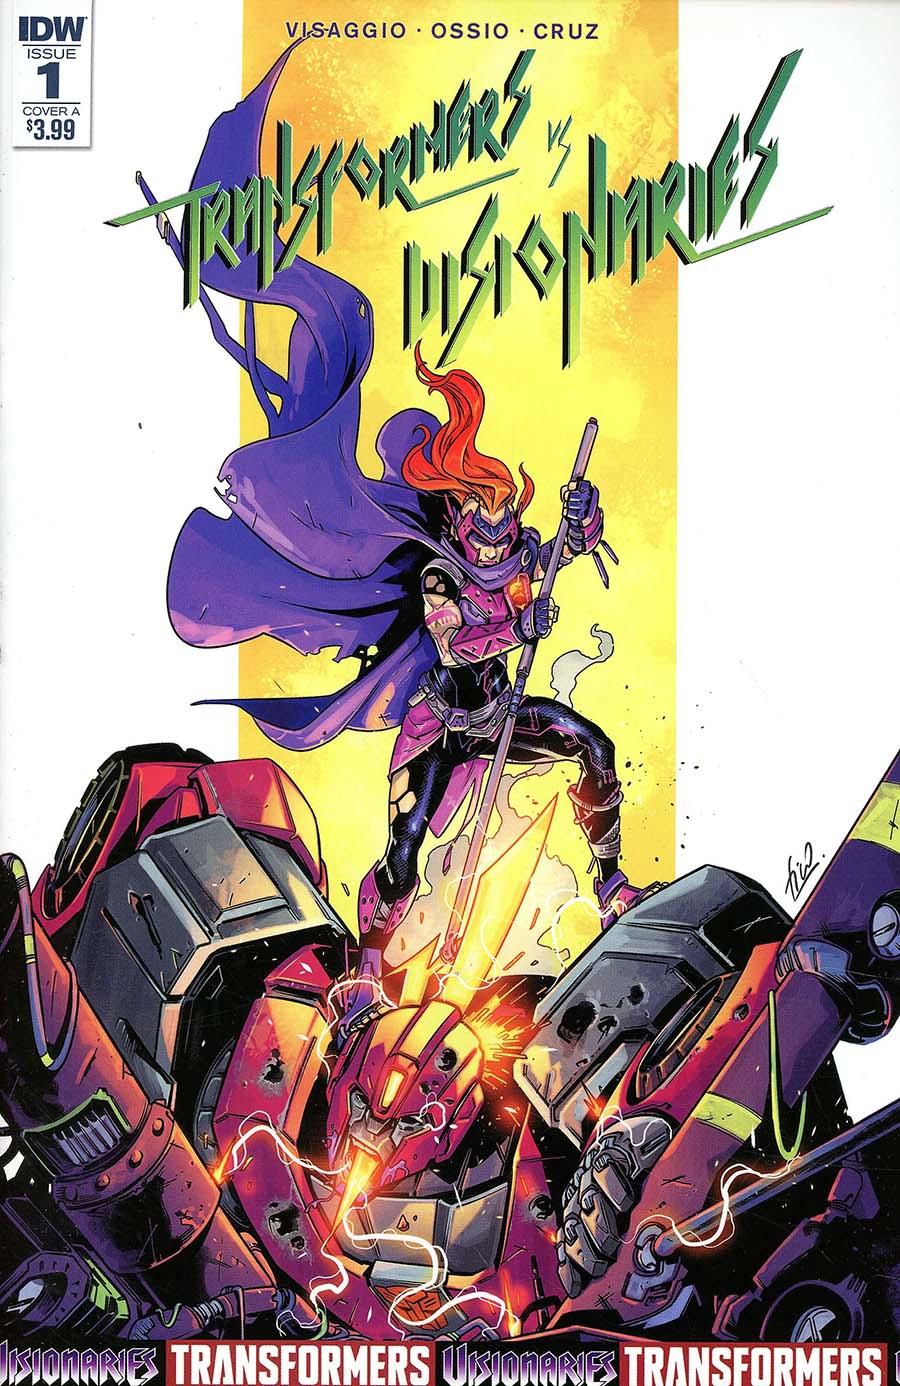 Transformers vs Visionaries Vol. 1 #1